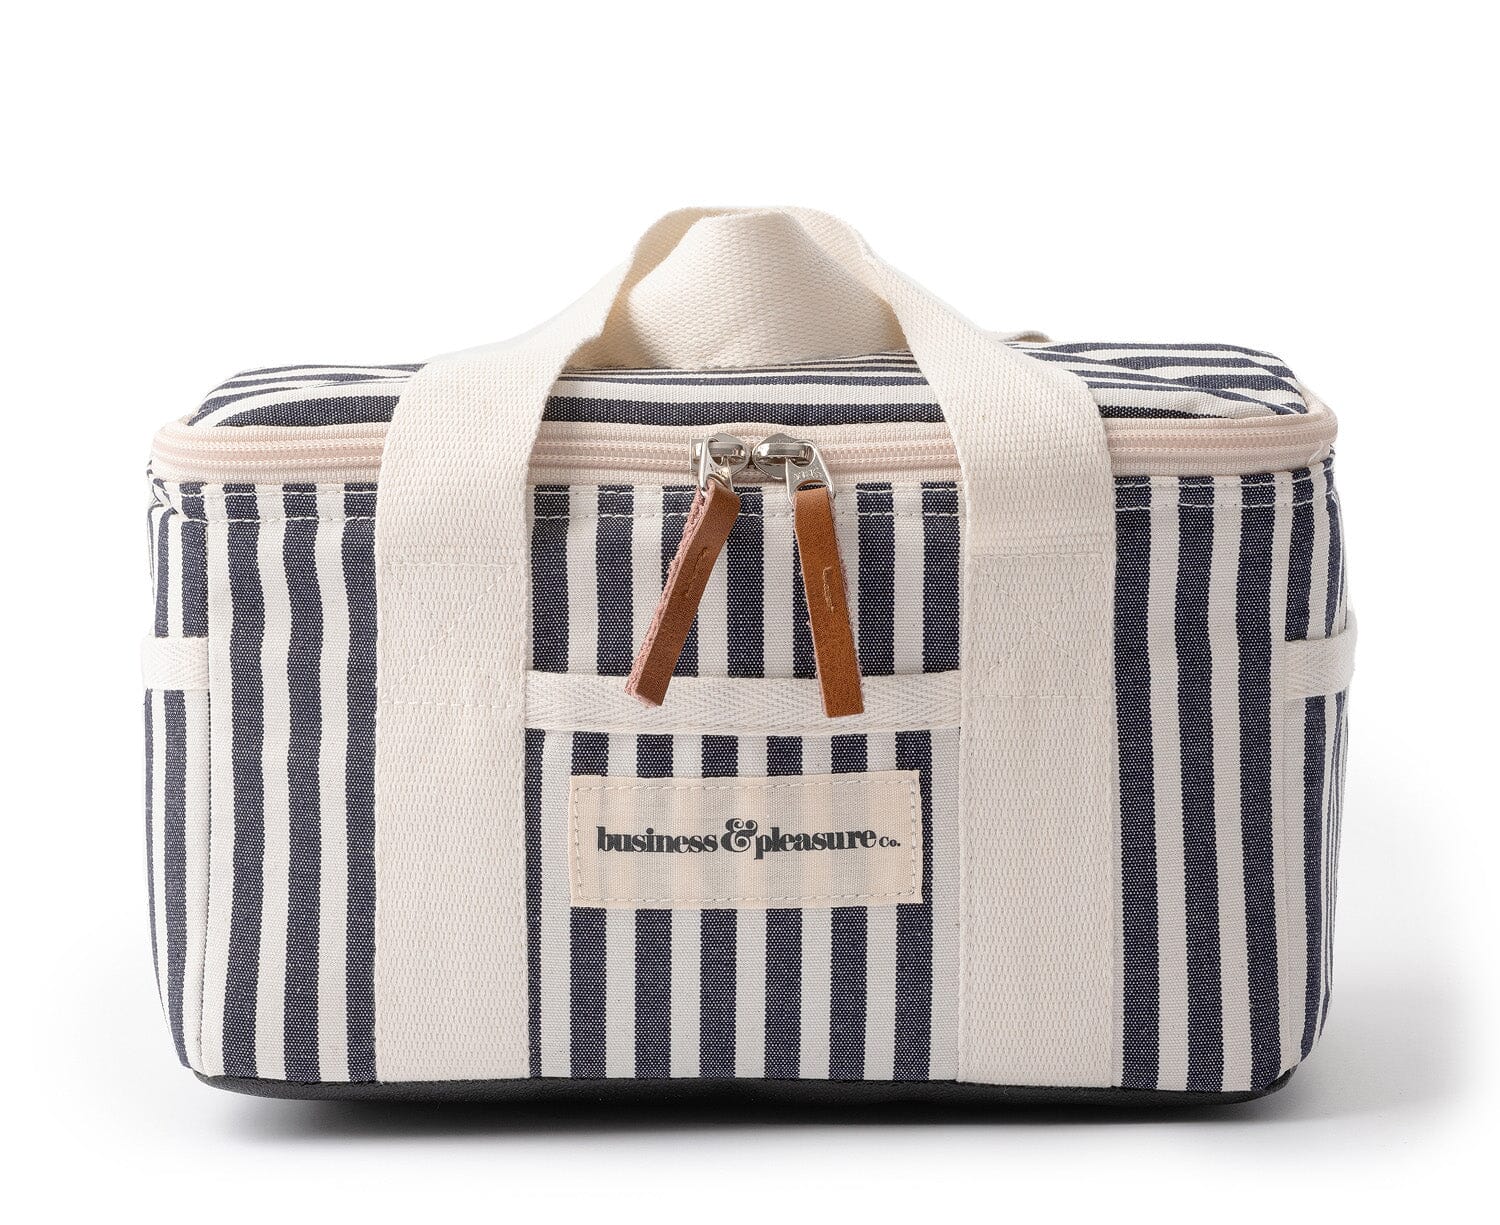 The Mini Cooler Bag - Lauren's Navy Stripe Mini Cooler Business & Pleasure Co 